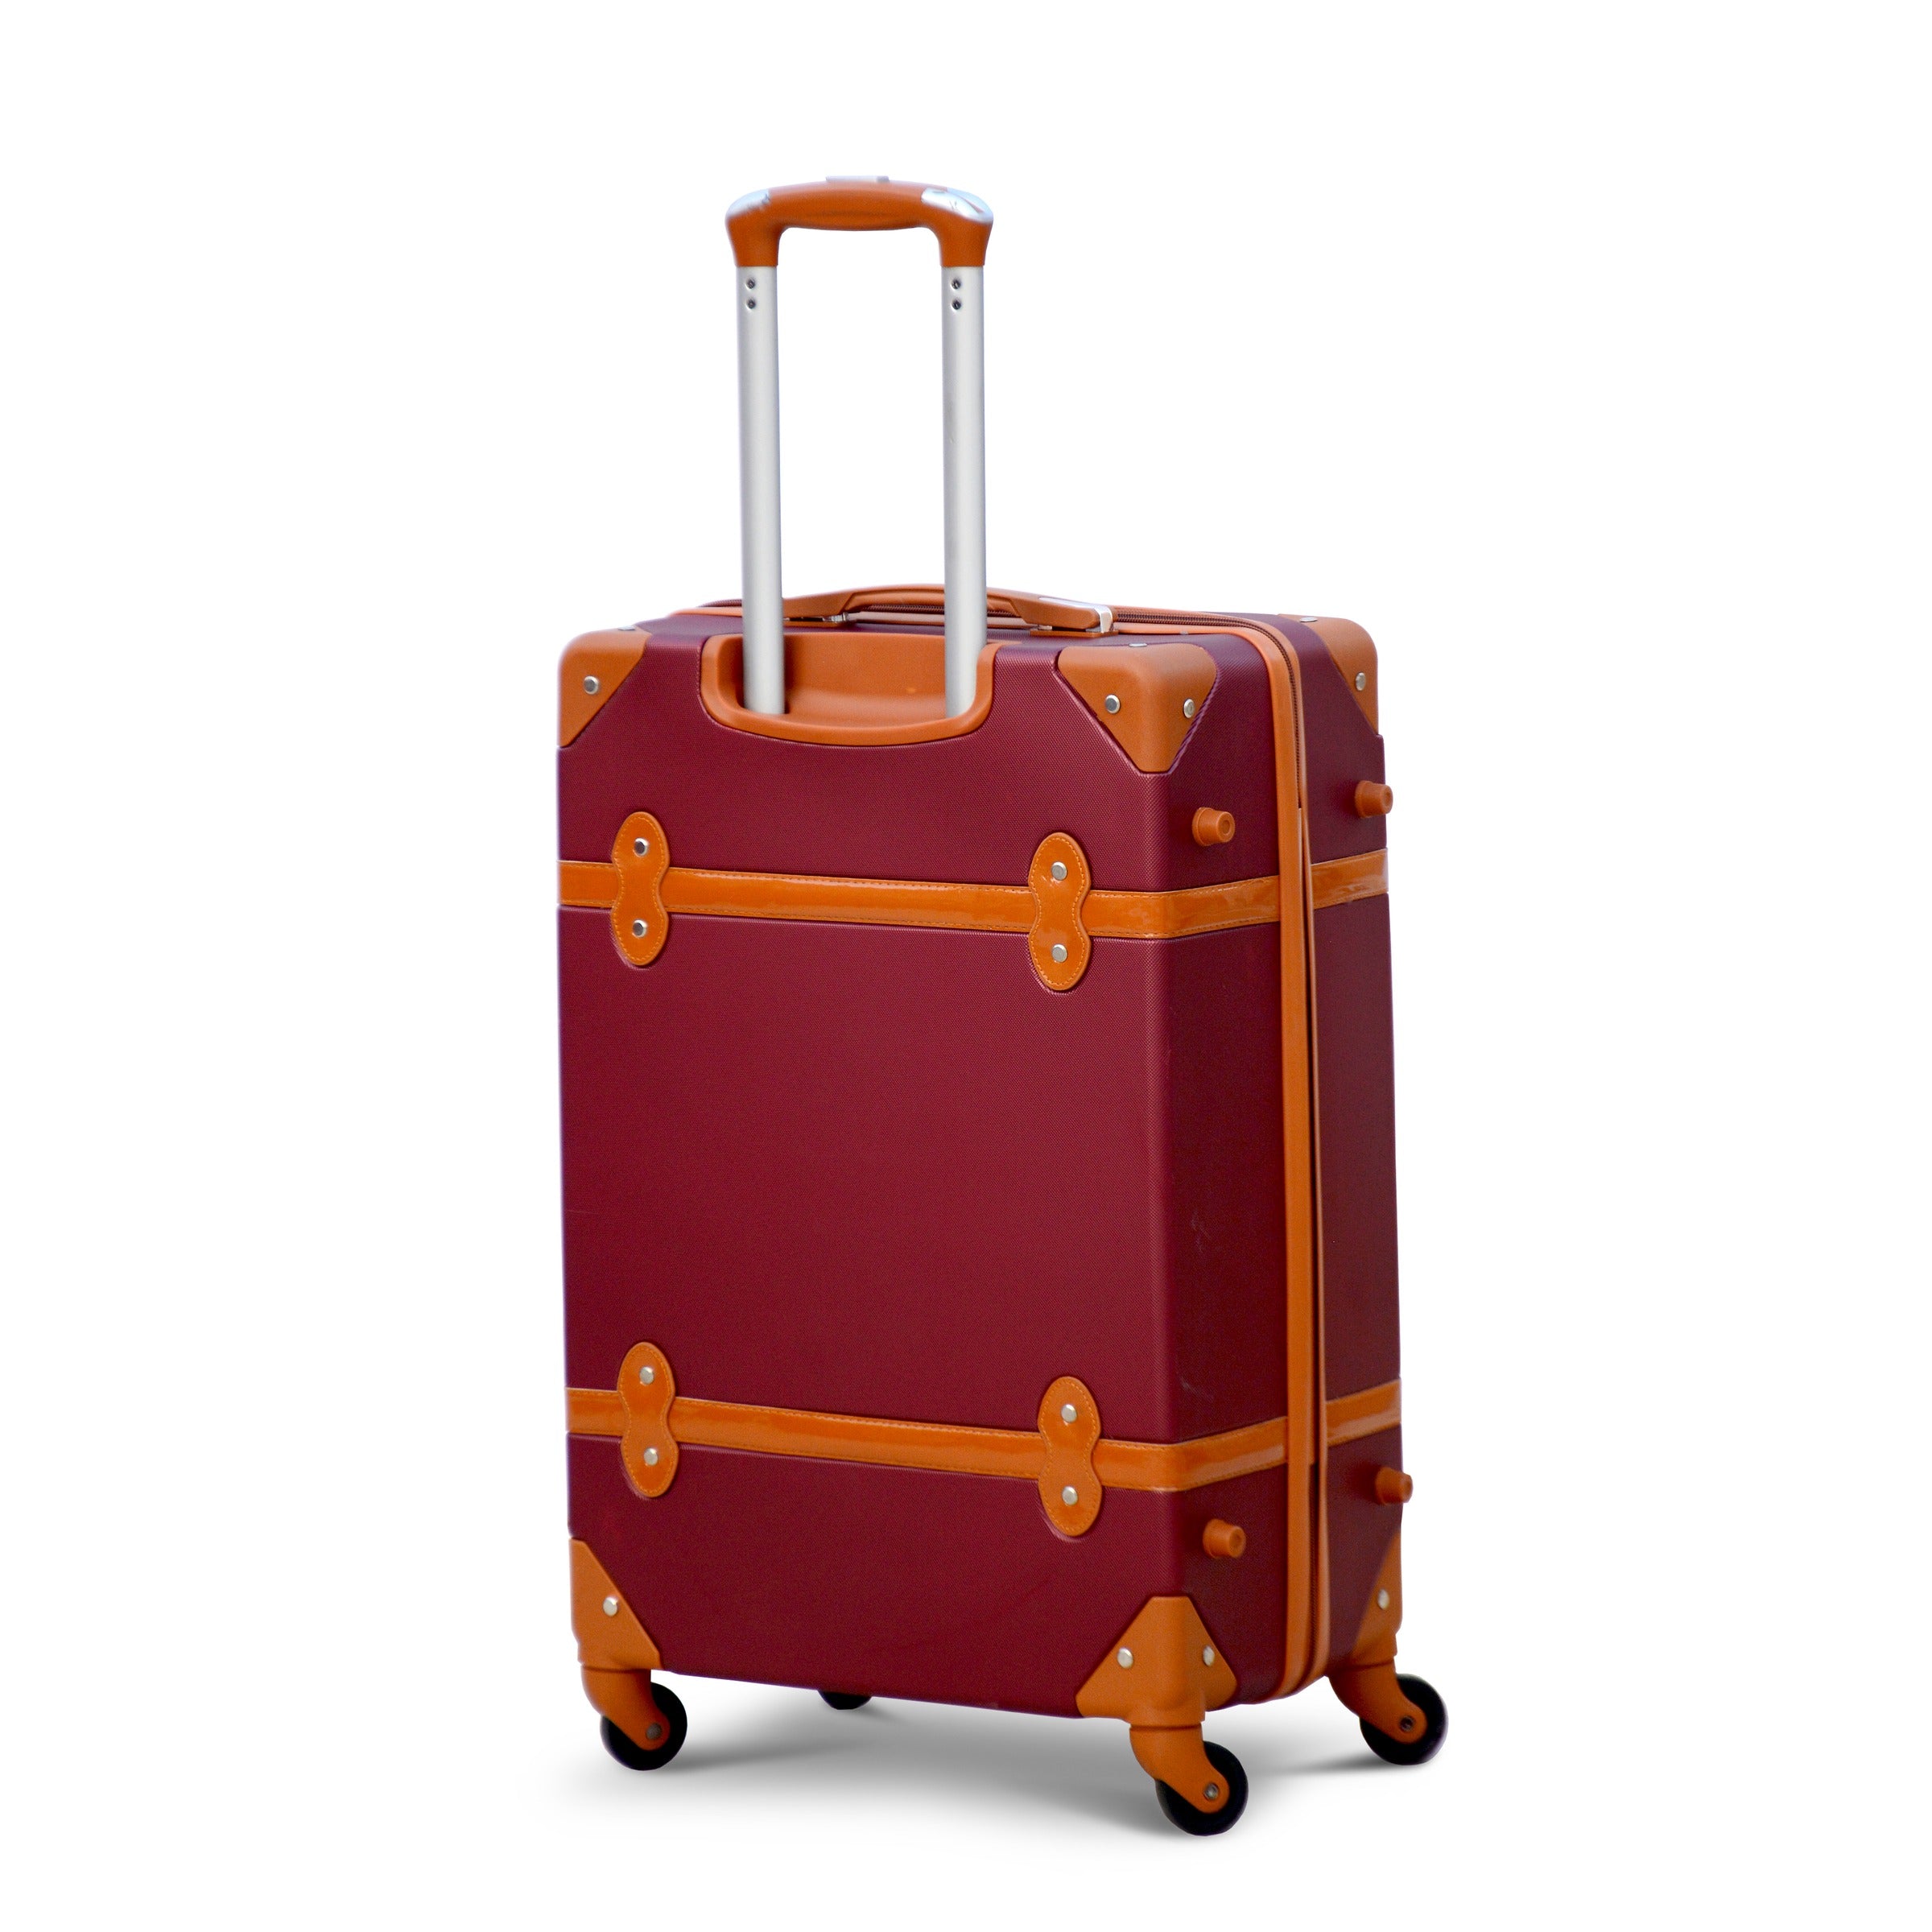 Corner Guard Lightweight ABS Luggage | Hard Case Trolley Bag | 28 Inches | 2 Year Warranty | Burgundy Colour